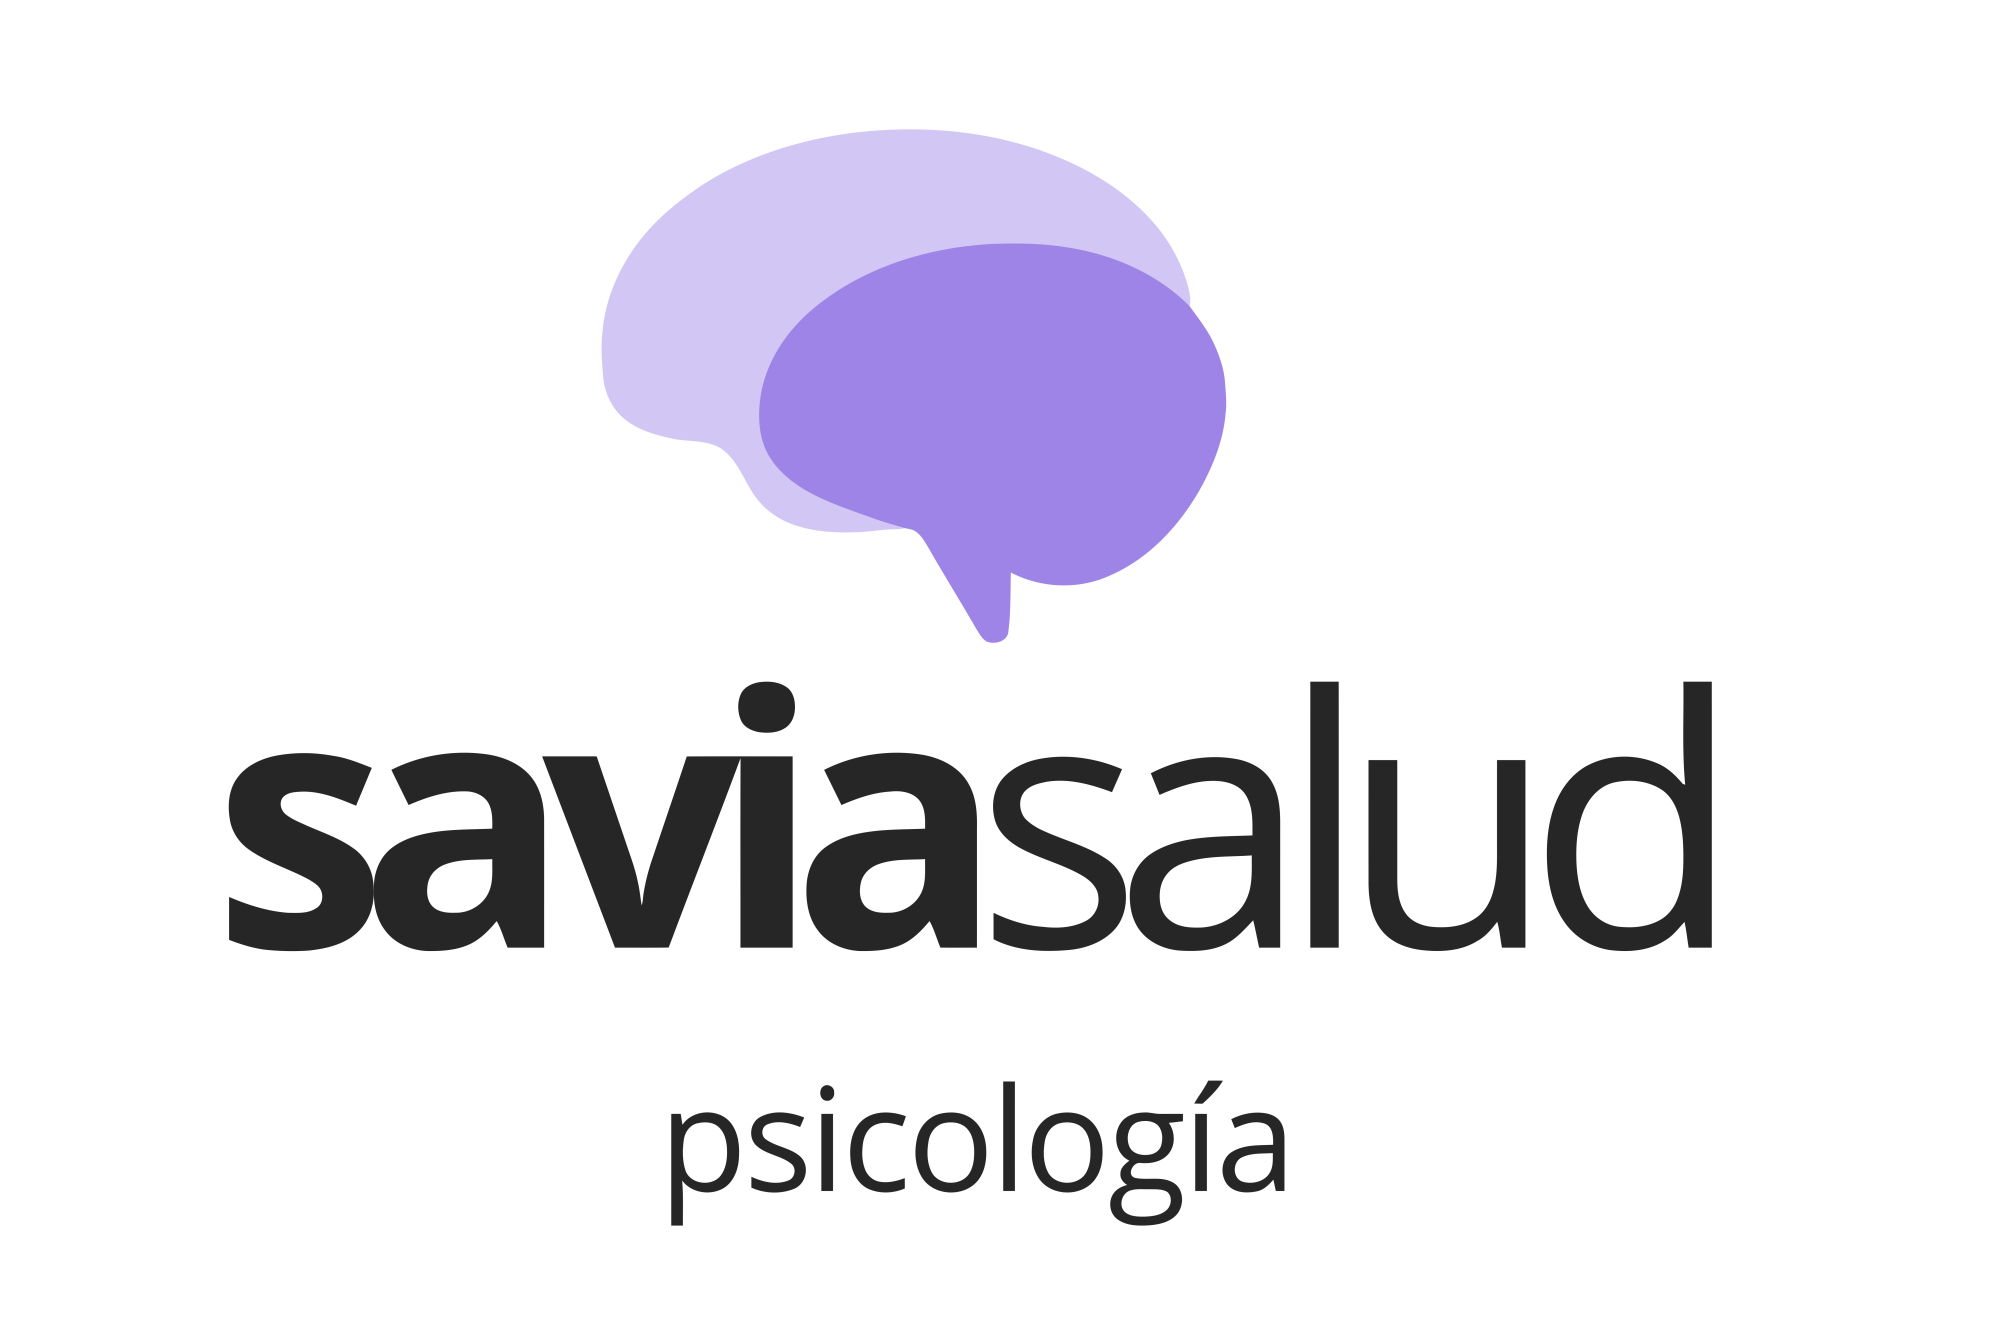 Saviasalud Psicólogos Puerto real